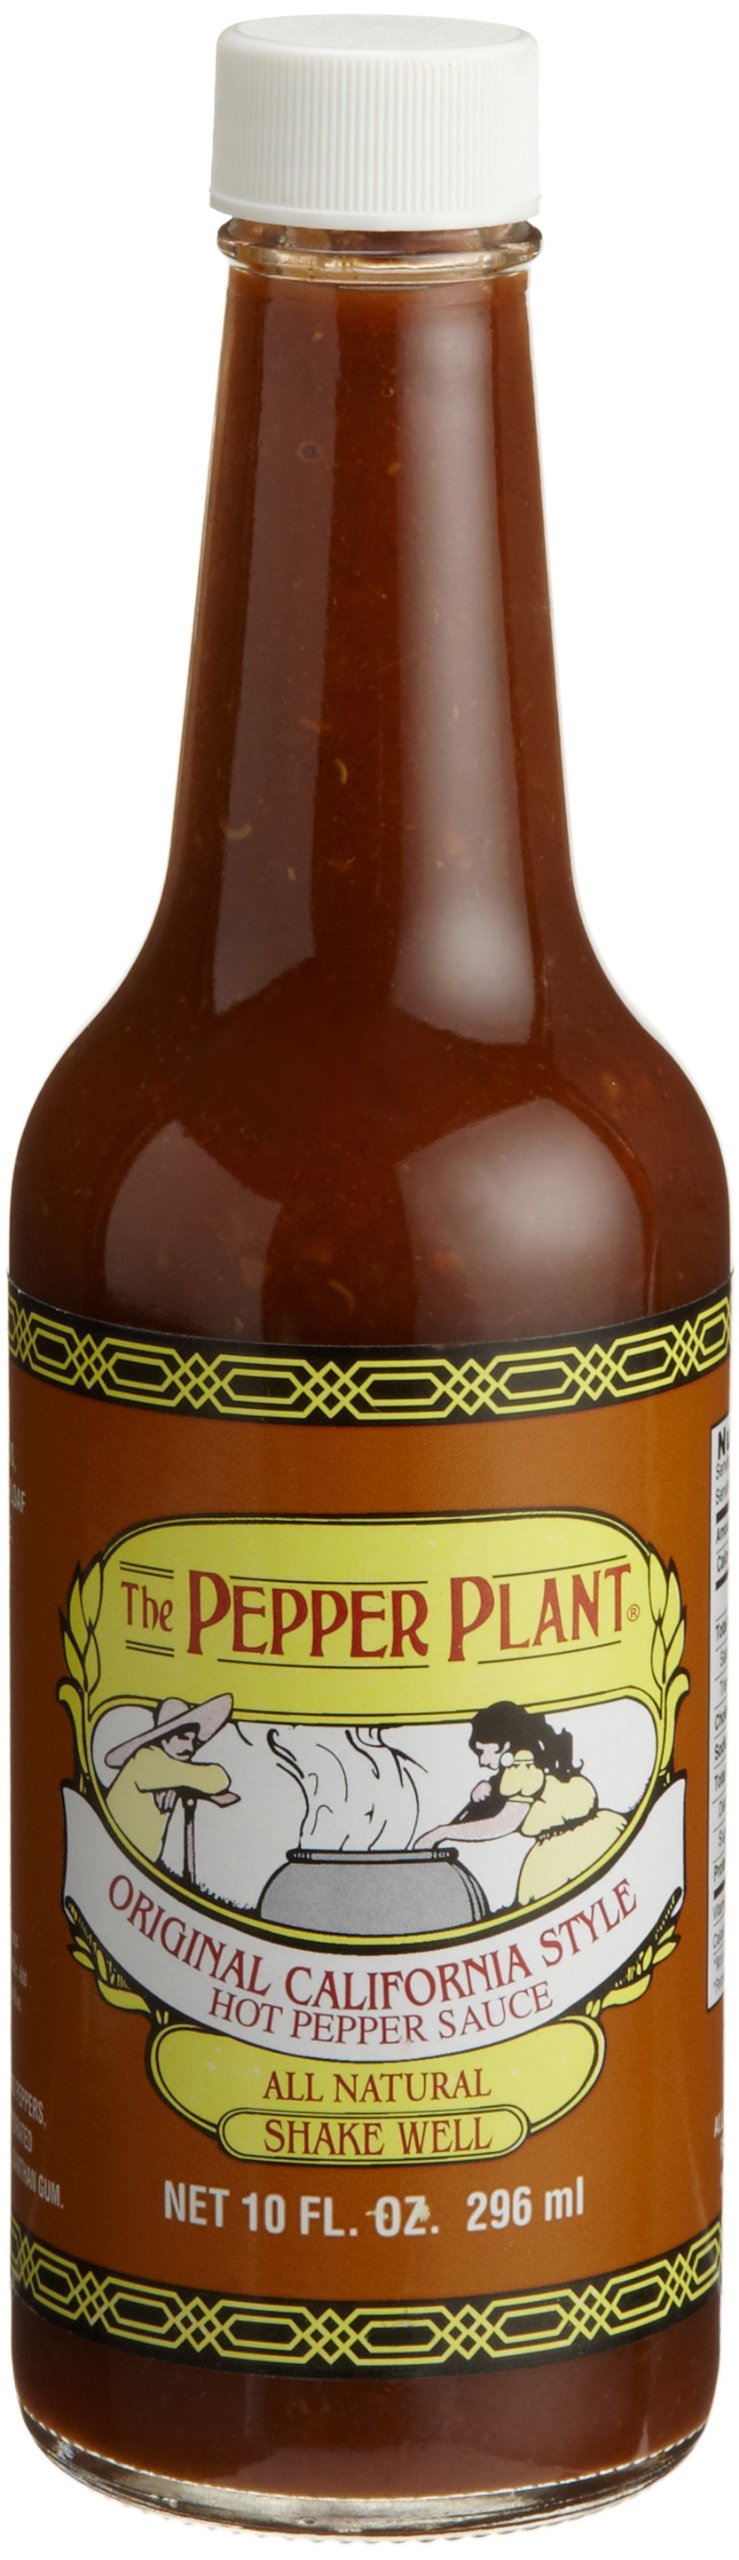 The Pepper Plant Original California Style